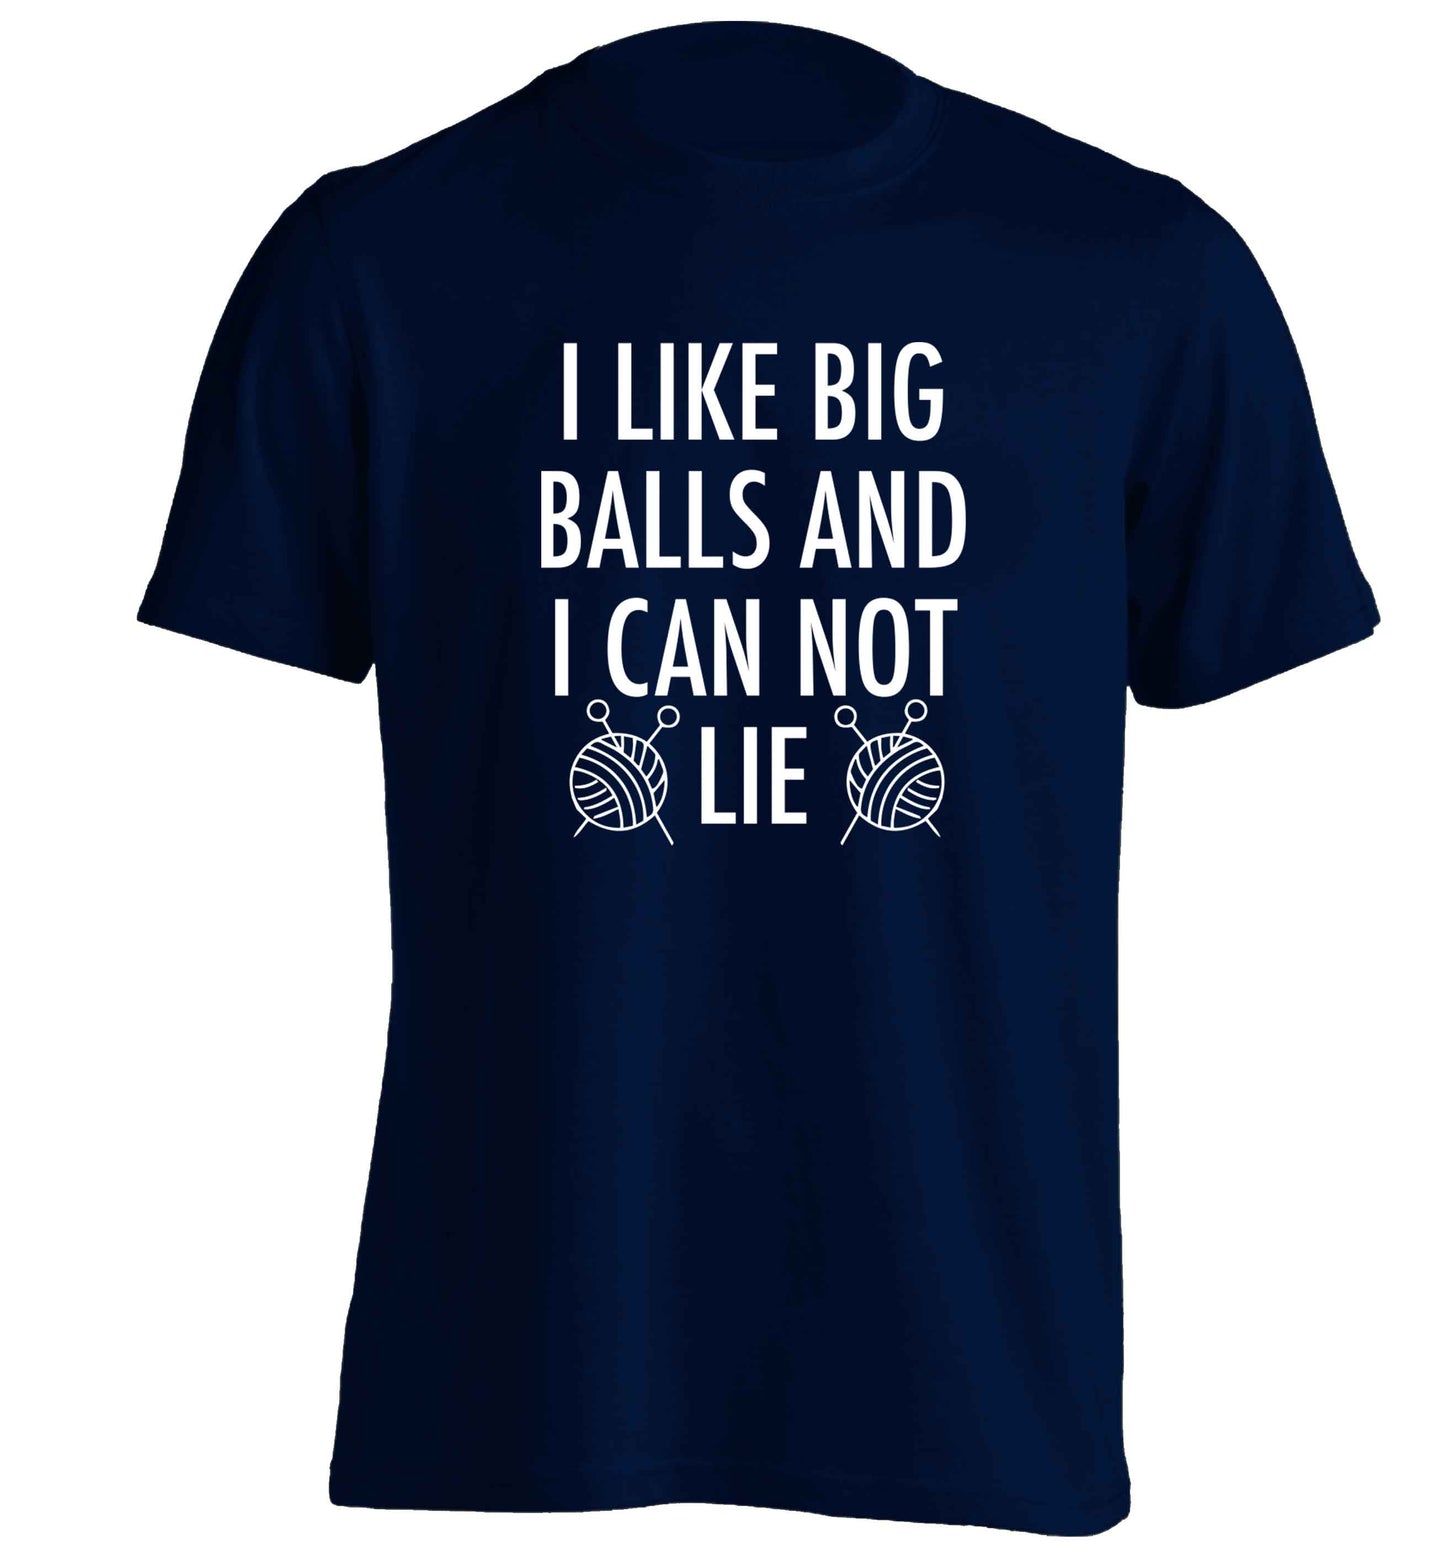 I like big balls and I can not lie adults unisex navy Tshirt 2XL